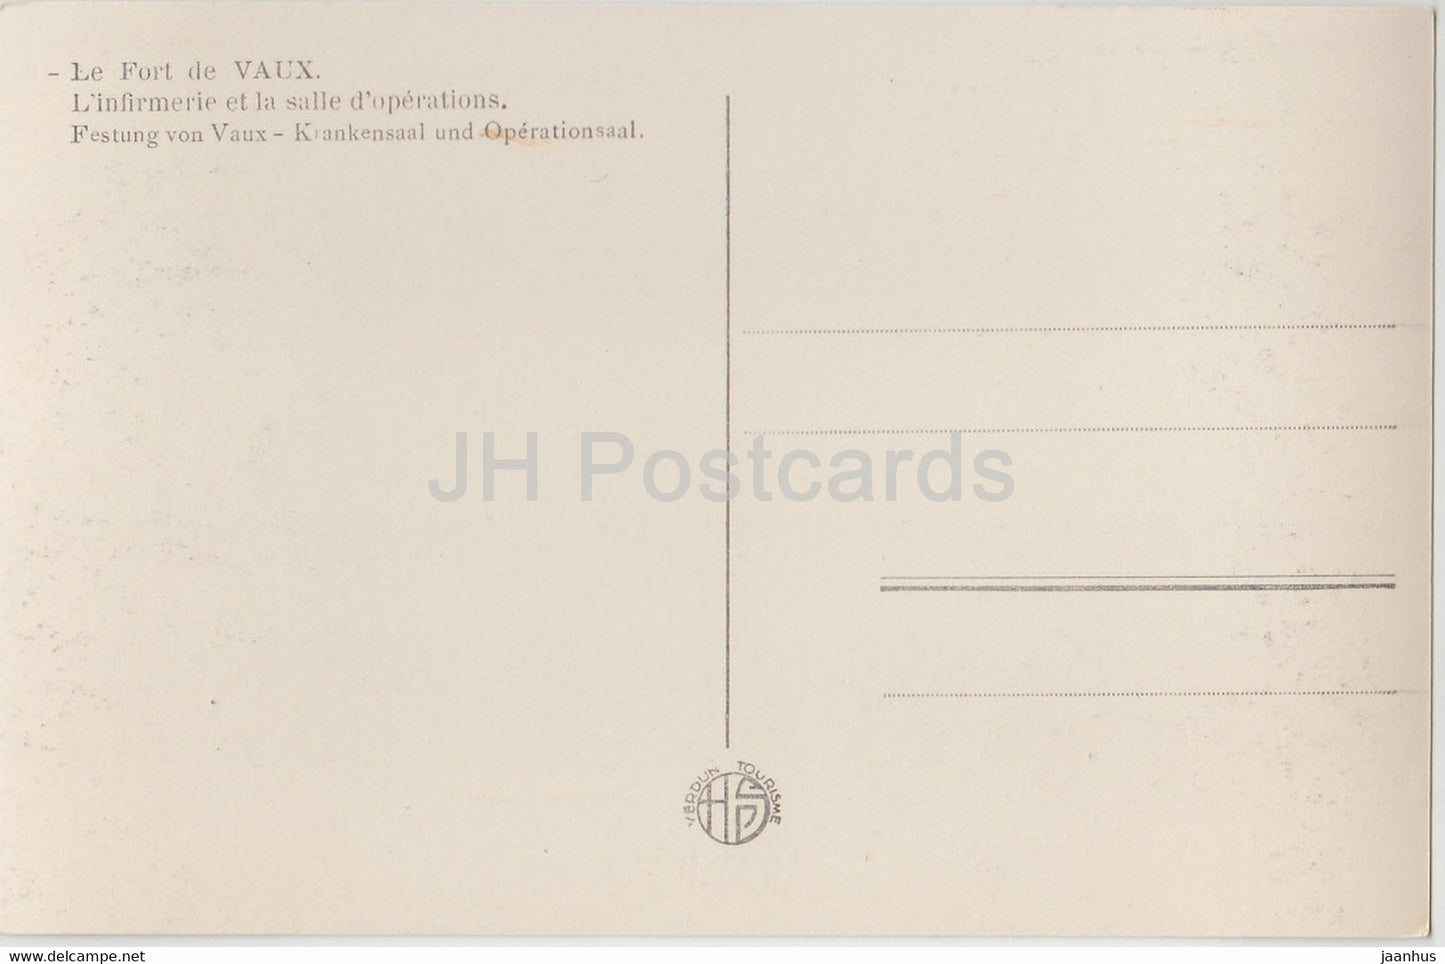 Le Fort de Vaux - L'infirmerie et la salle d'operations - Militär - Erster Weltkrieg - 192 - alte Postkarte - Frankreich - unbenutzt